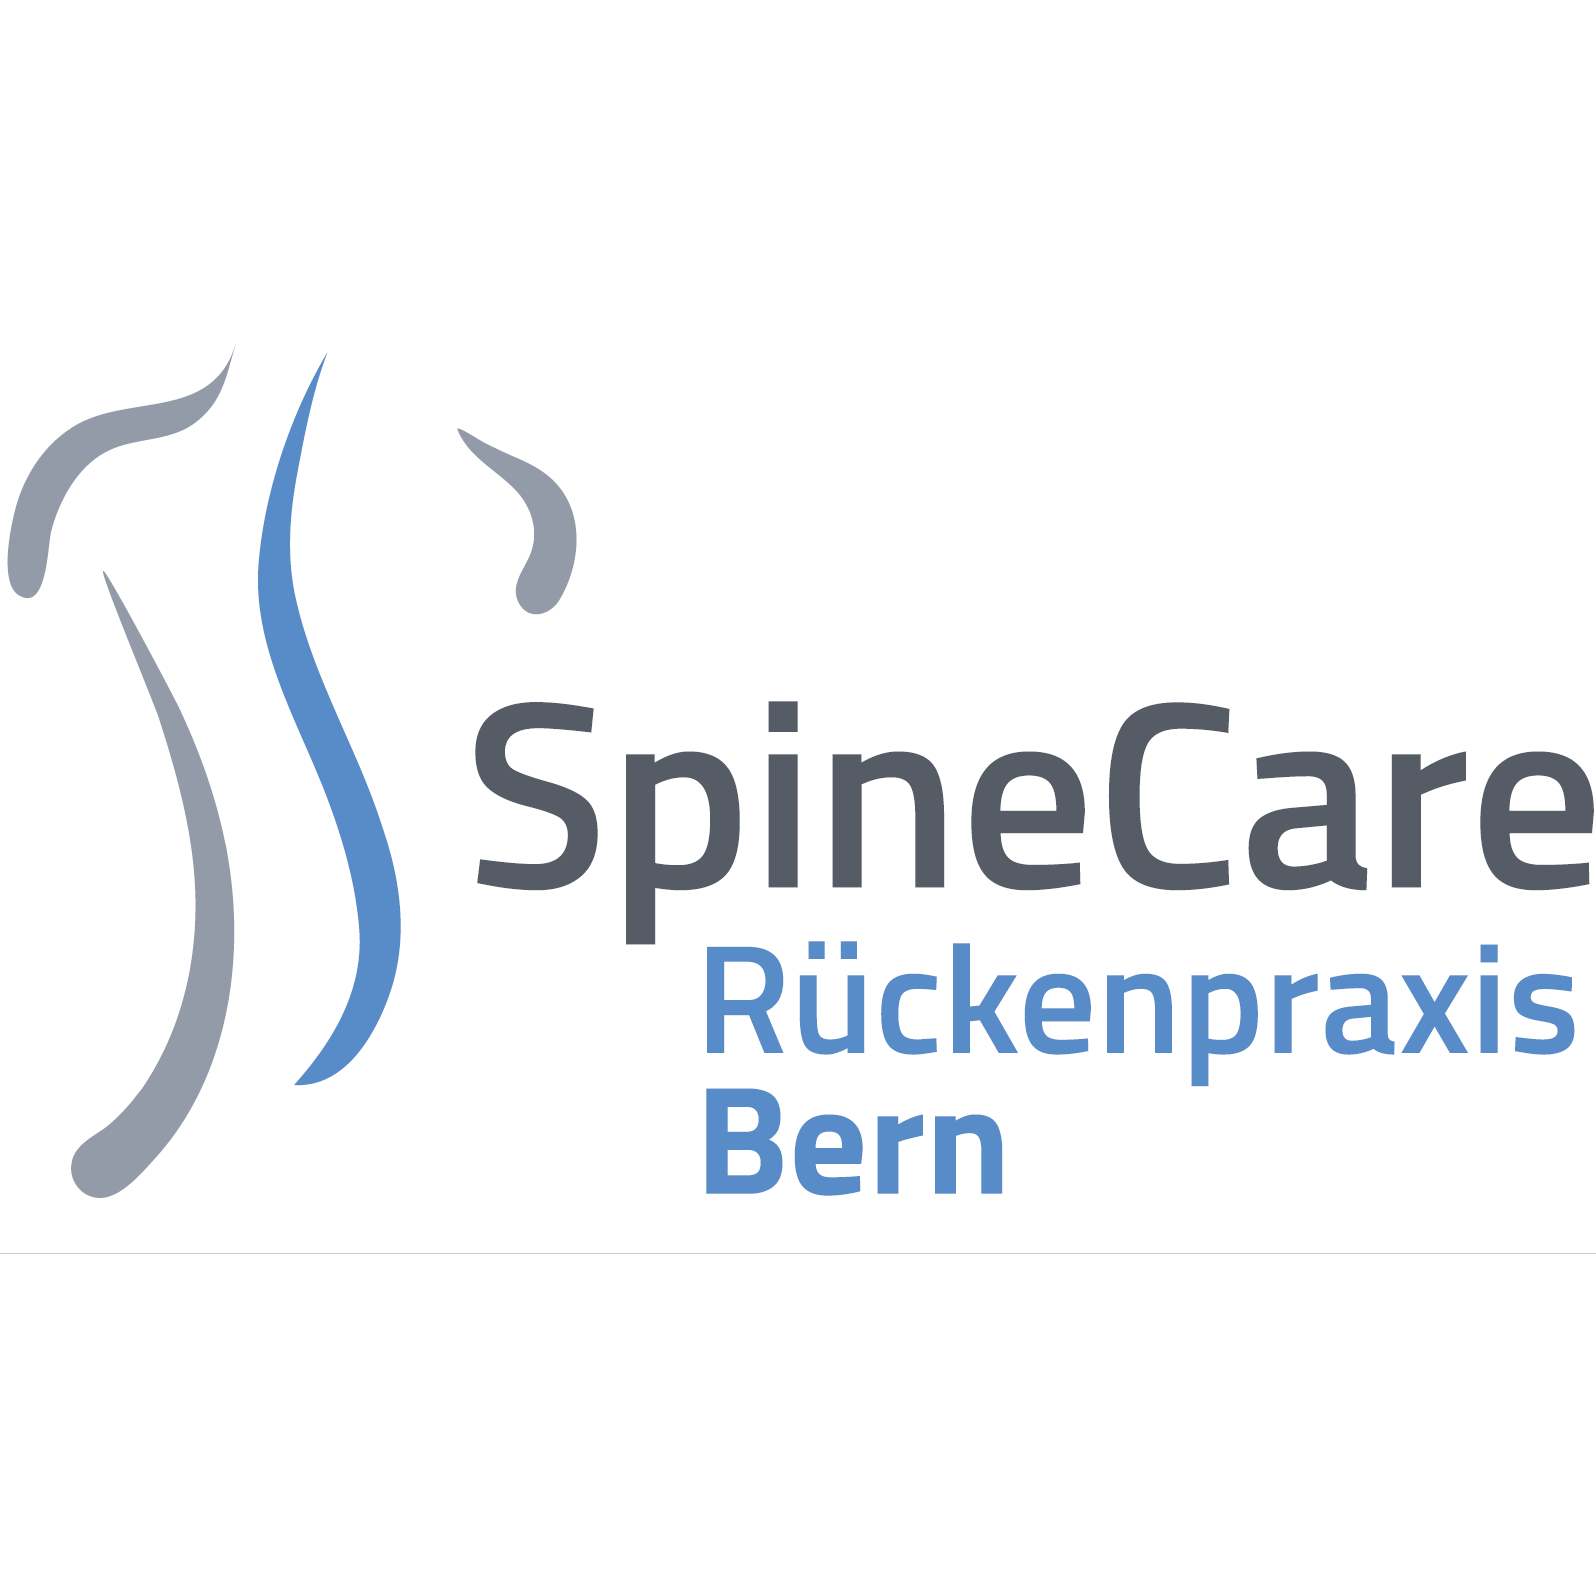 SpineCare Rückenpraxis Bern 031 301 60 60